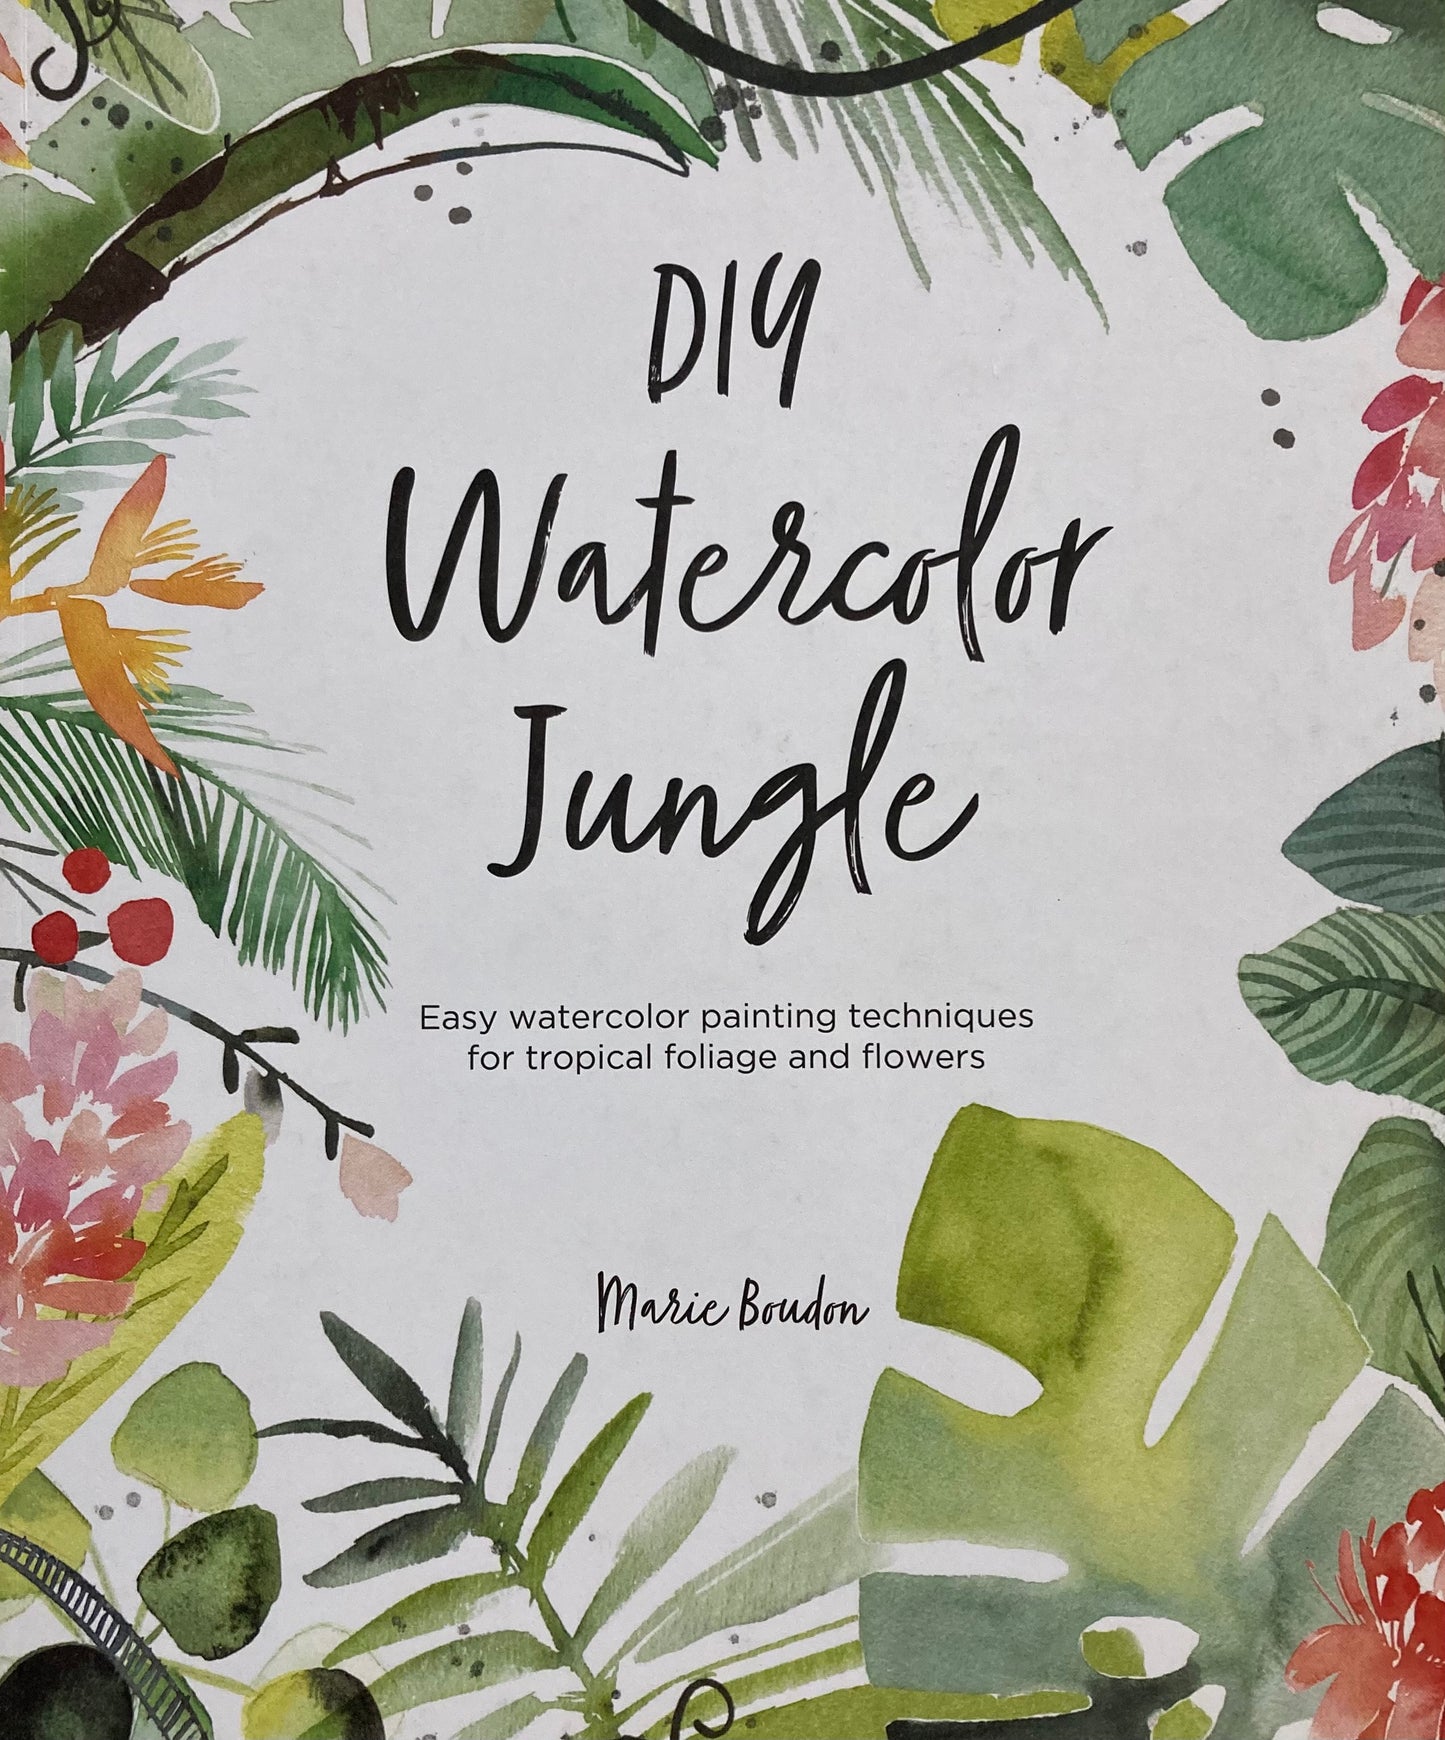 DIY Watercolour Jungle by Marie Boudon